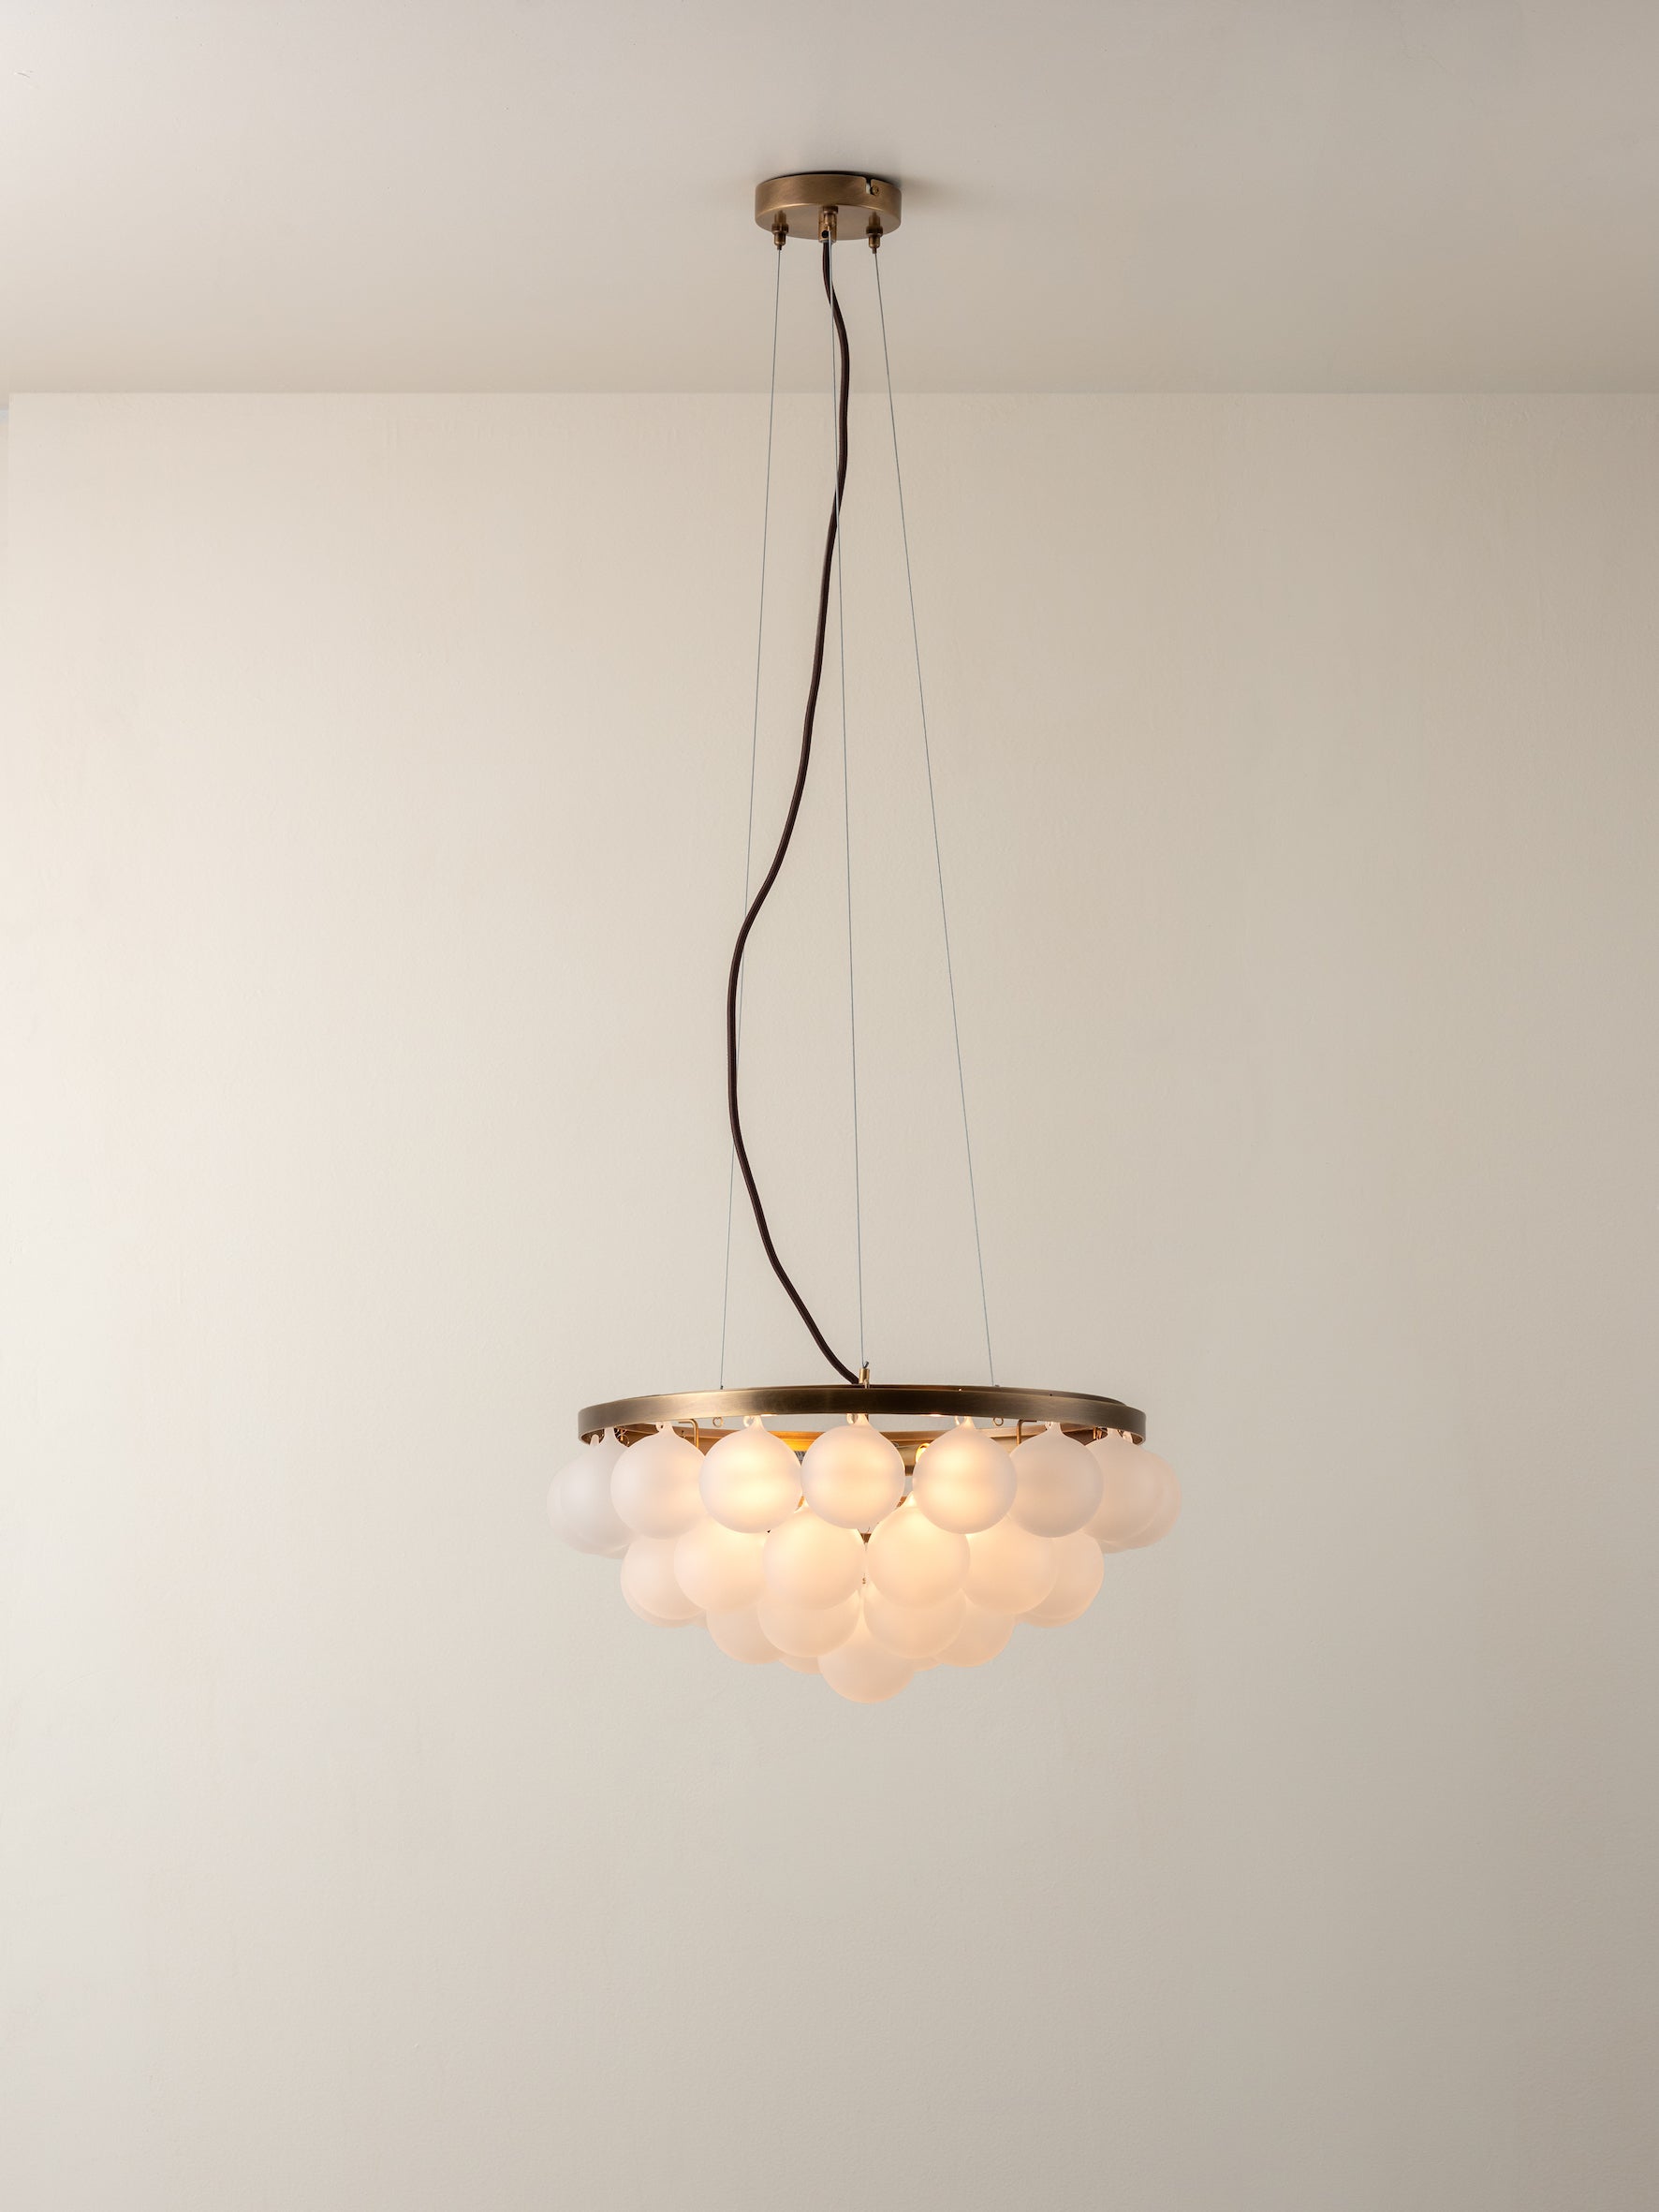 Cloudia - 3 light small white frosted brass chandelier | Chandelier | Lights & Lamps | UK | Modern Affordable Designer Lighting